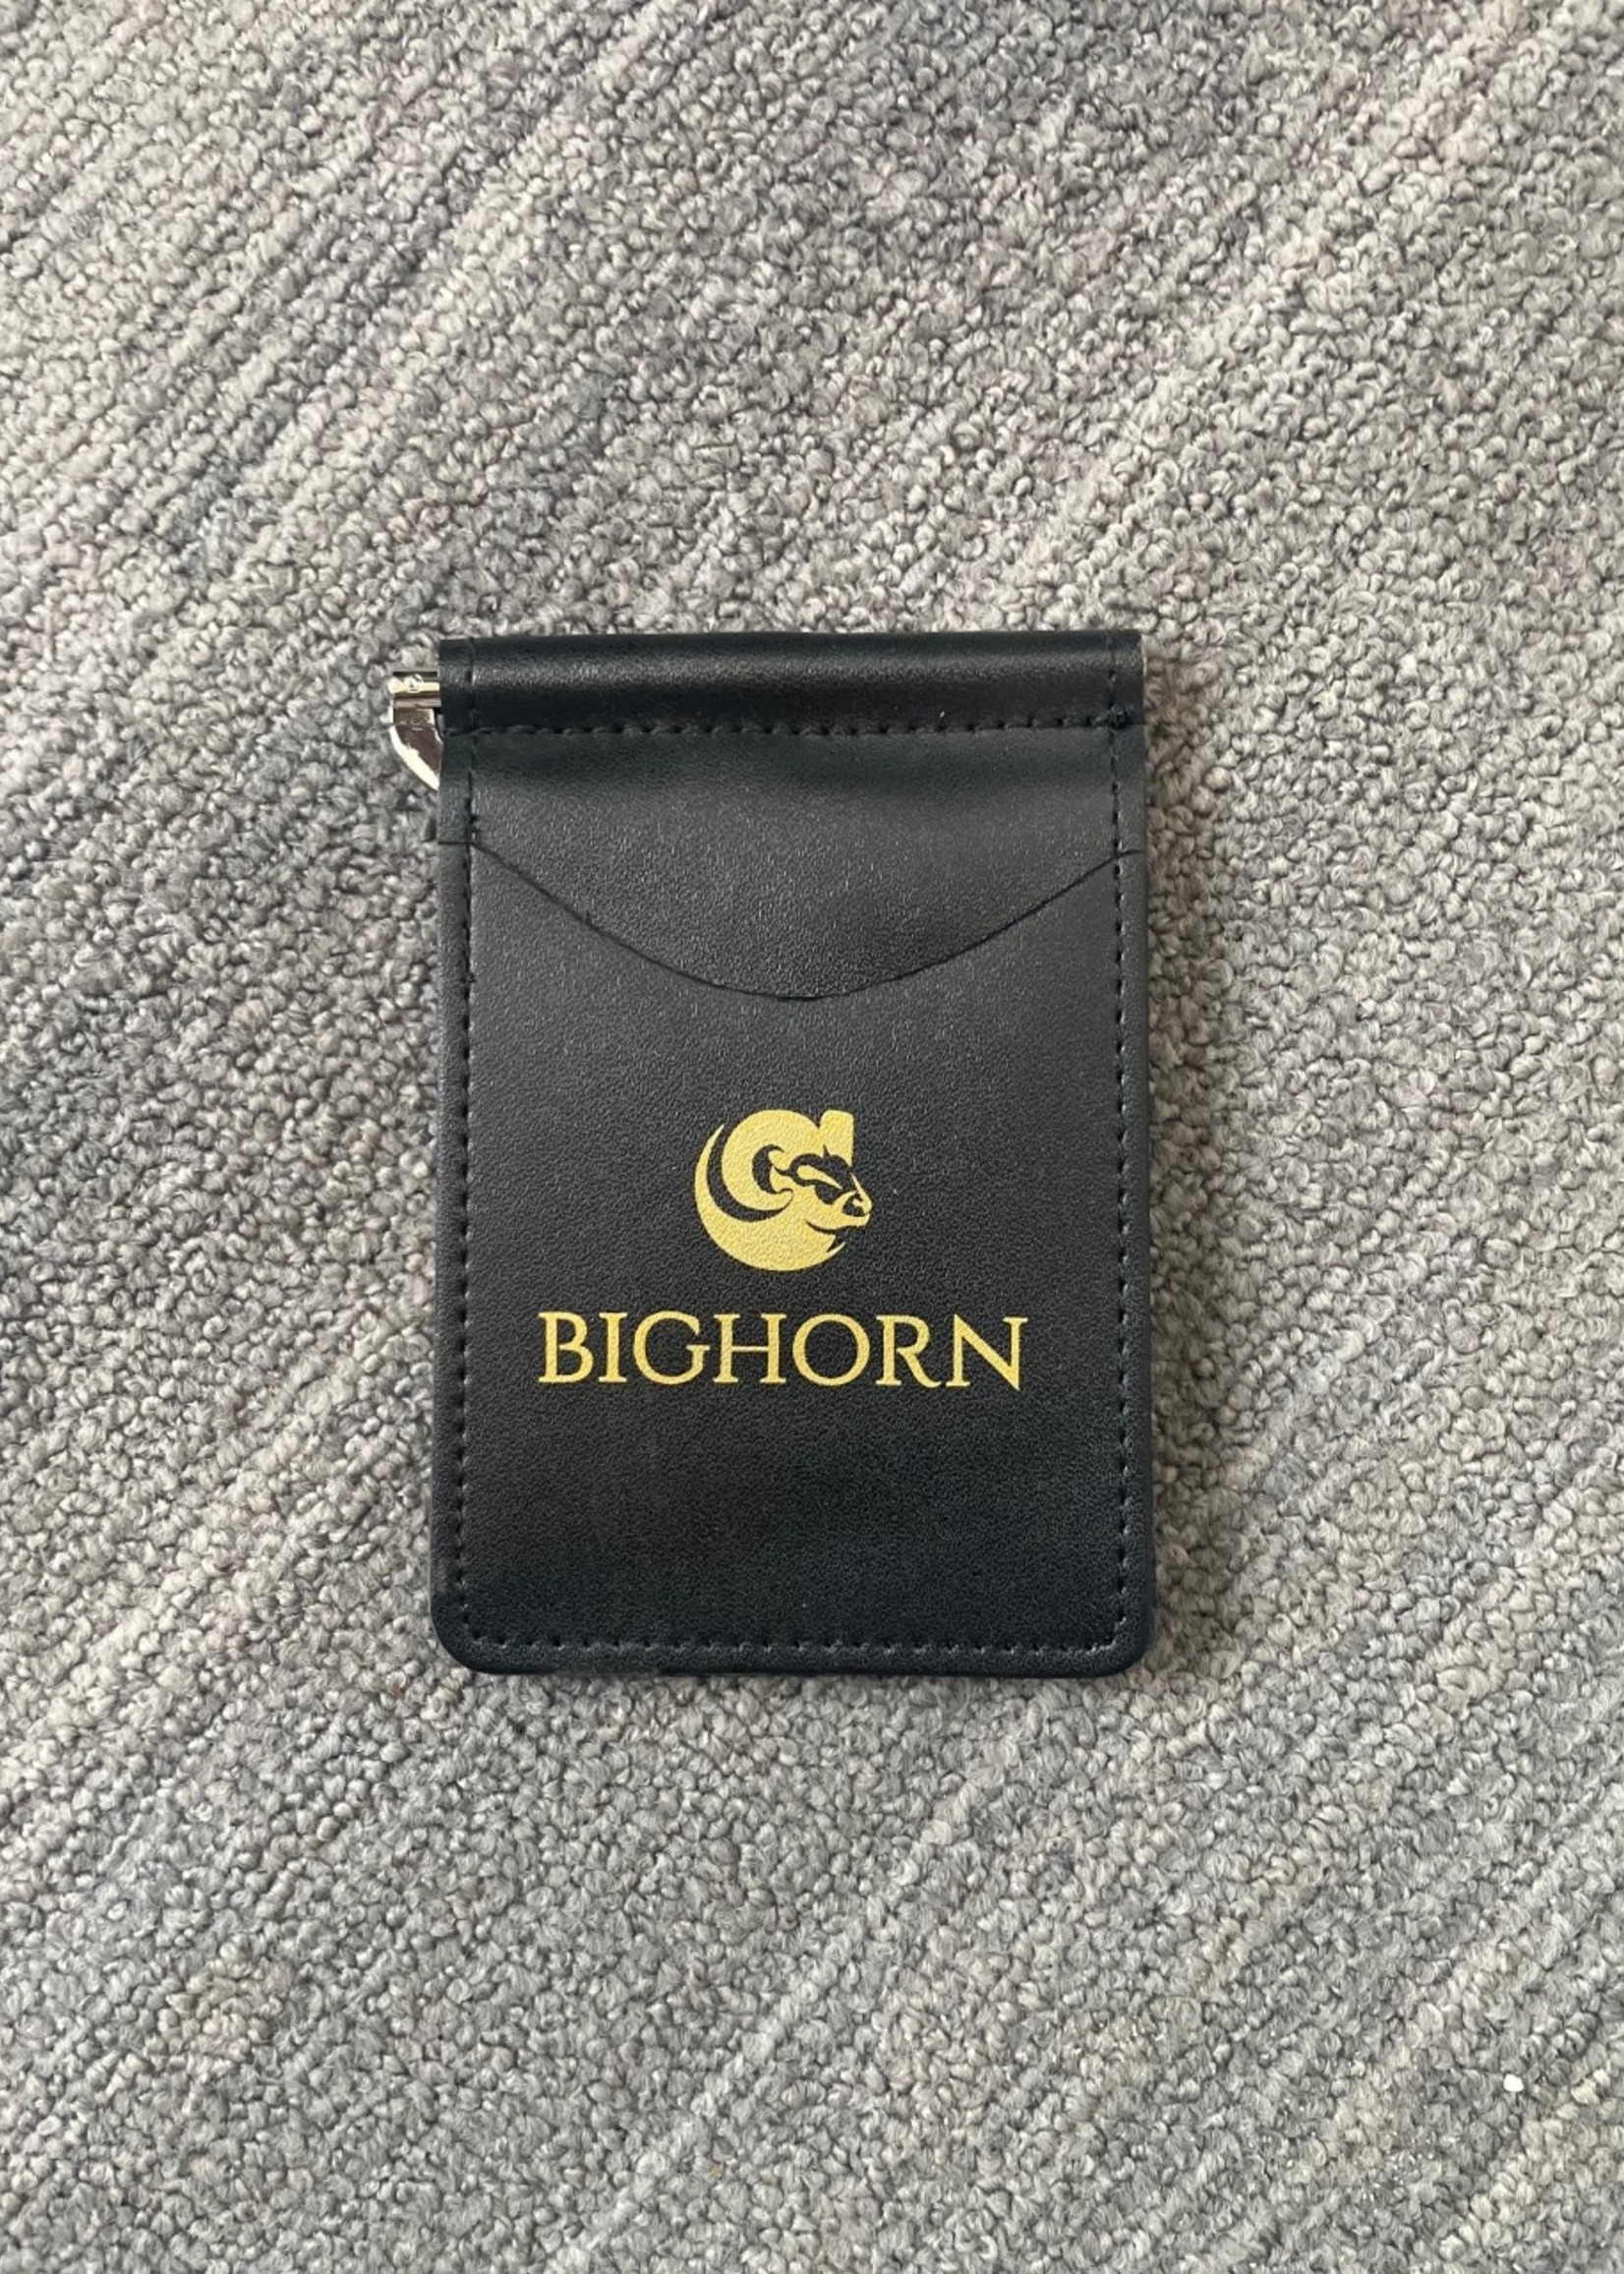 Bighorn Leather Money Clip